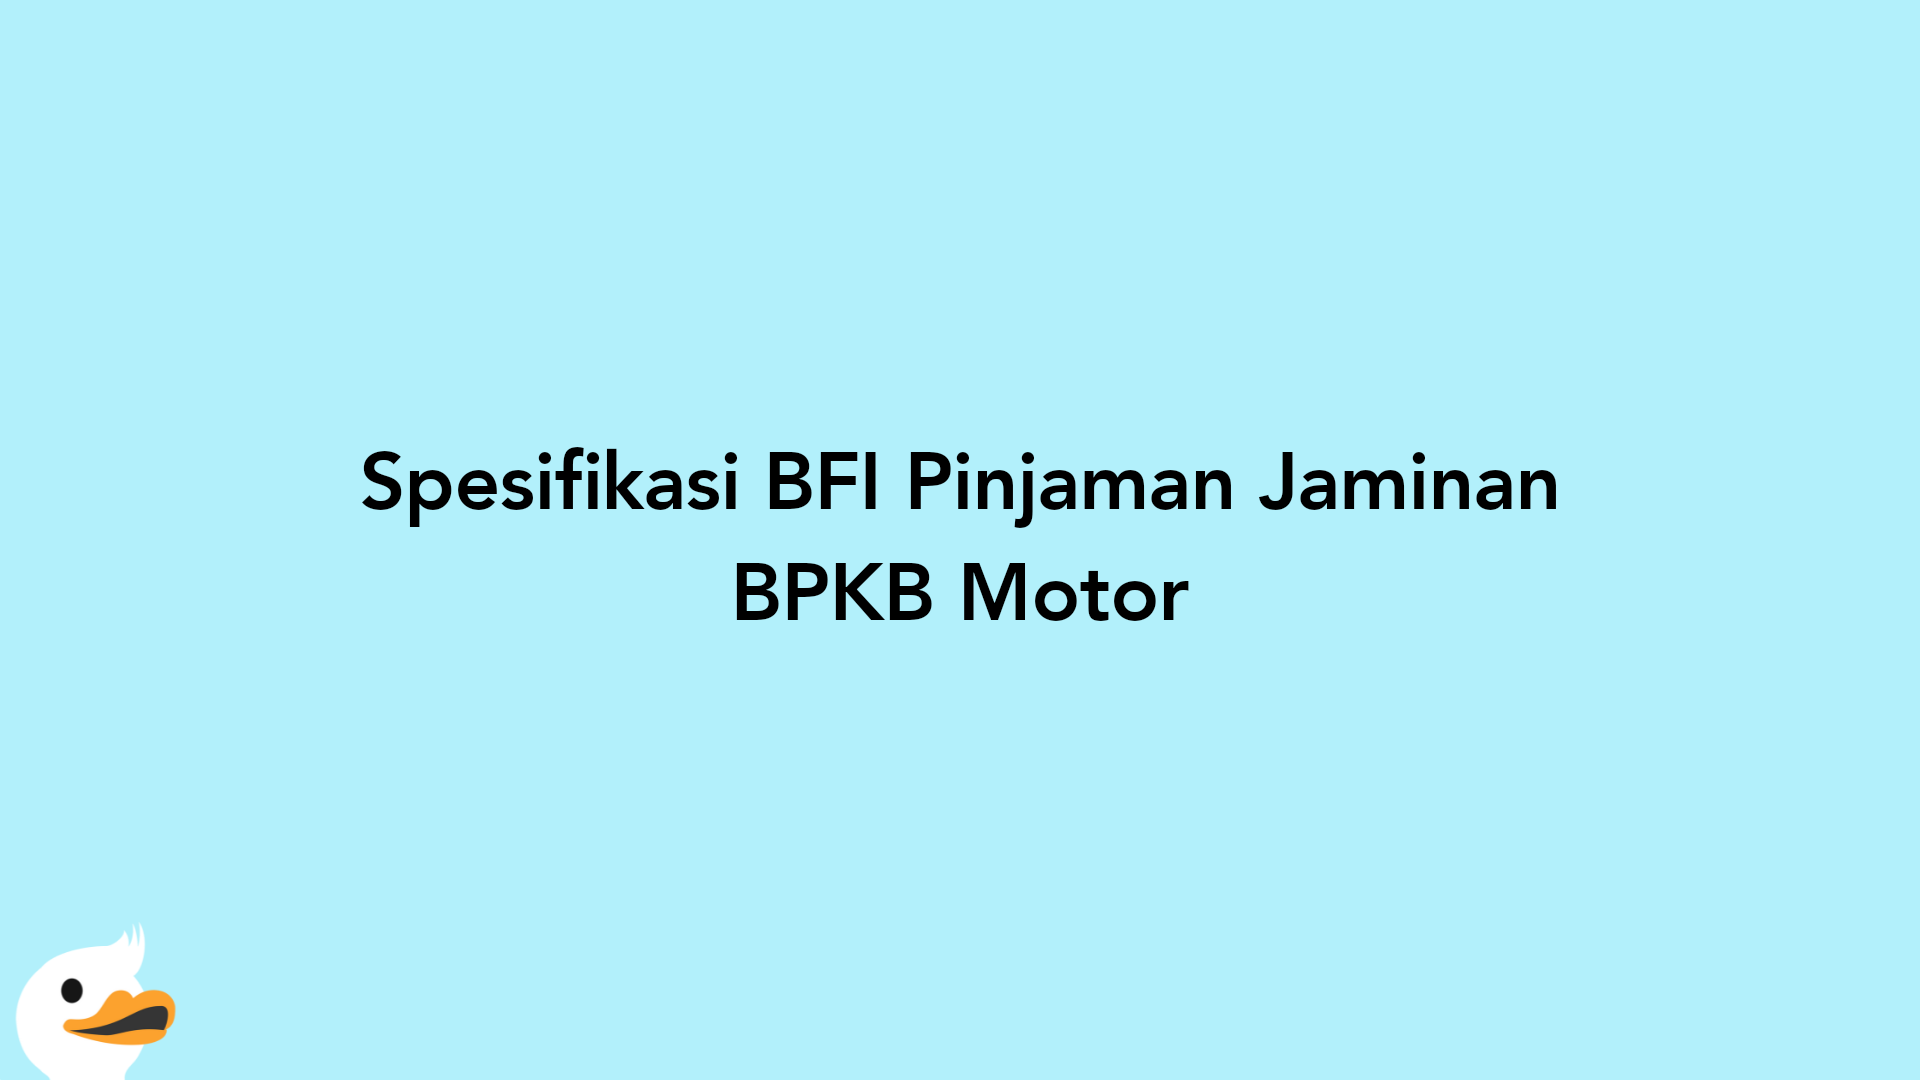 Spesifikasi BFI Pinjaman Jaminan BPKB Motor